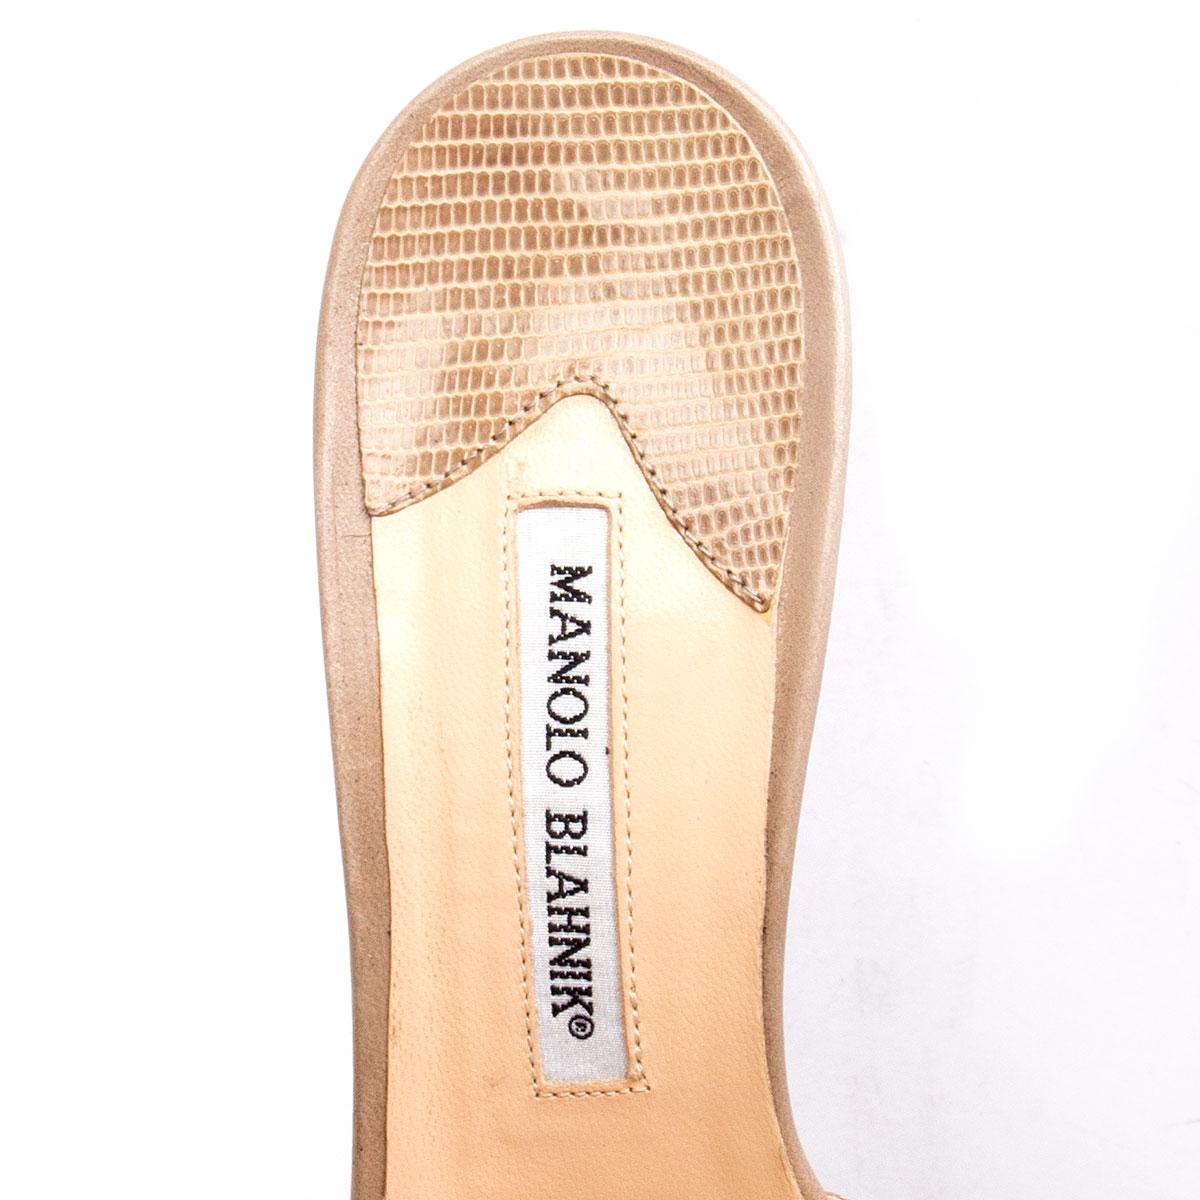 Beige MANOLO BLAHNIK taupe lizard CALLAMU Crisscross Sandals Shoes 38.5